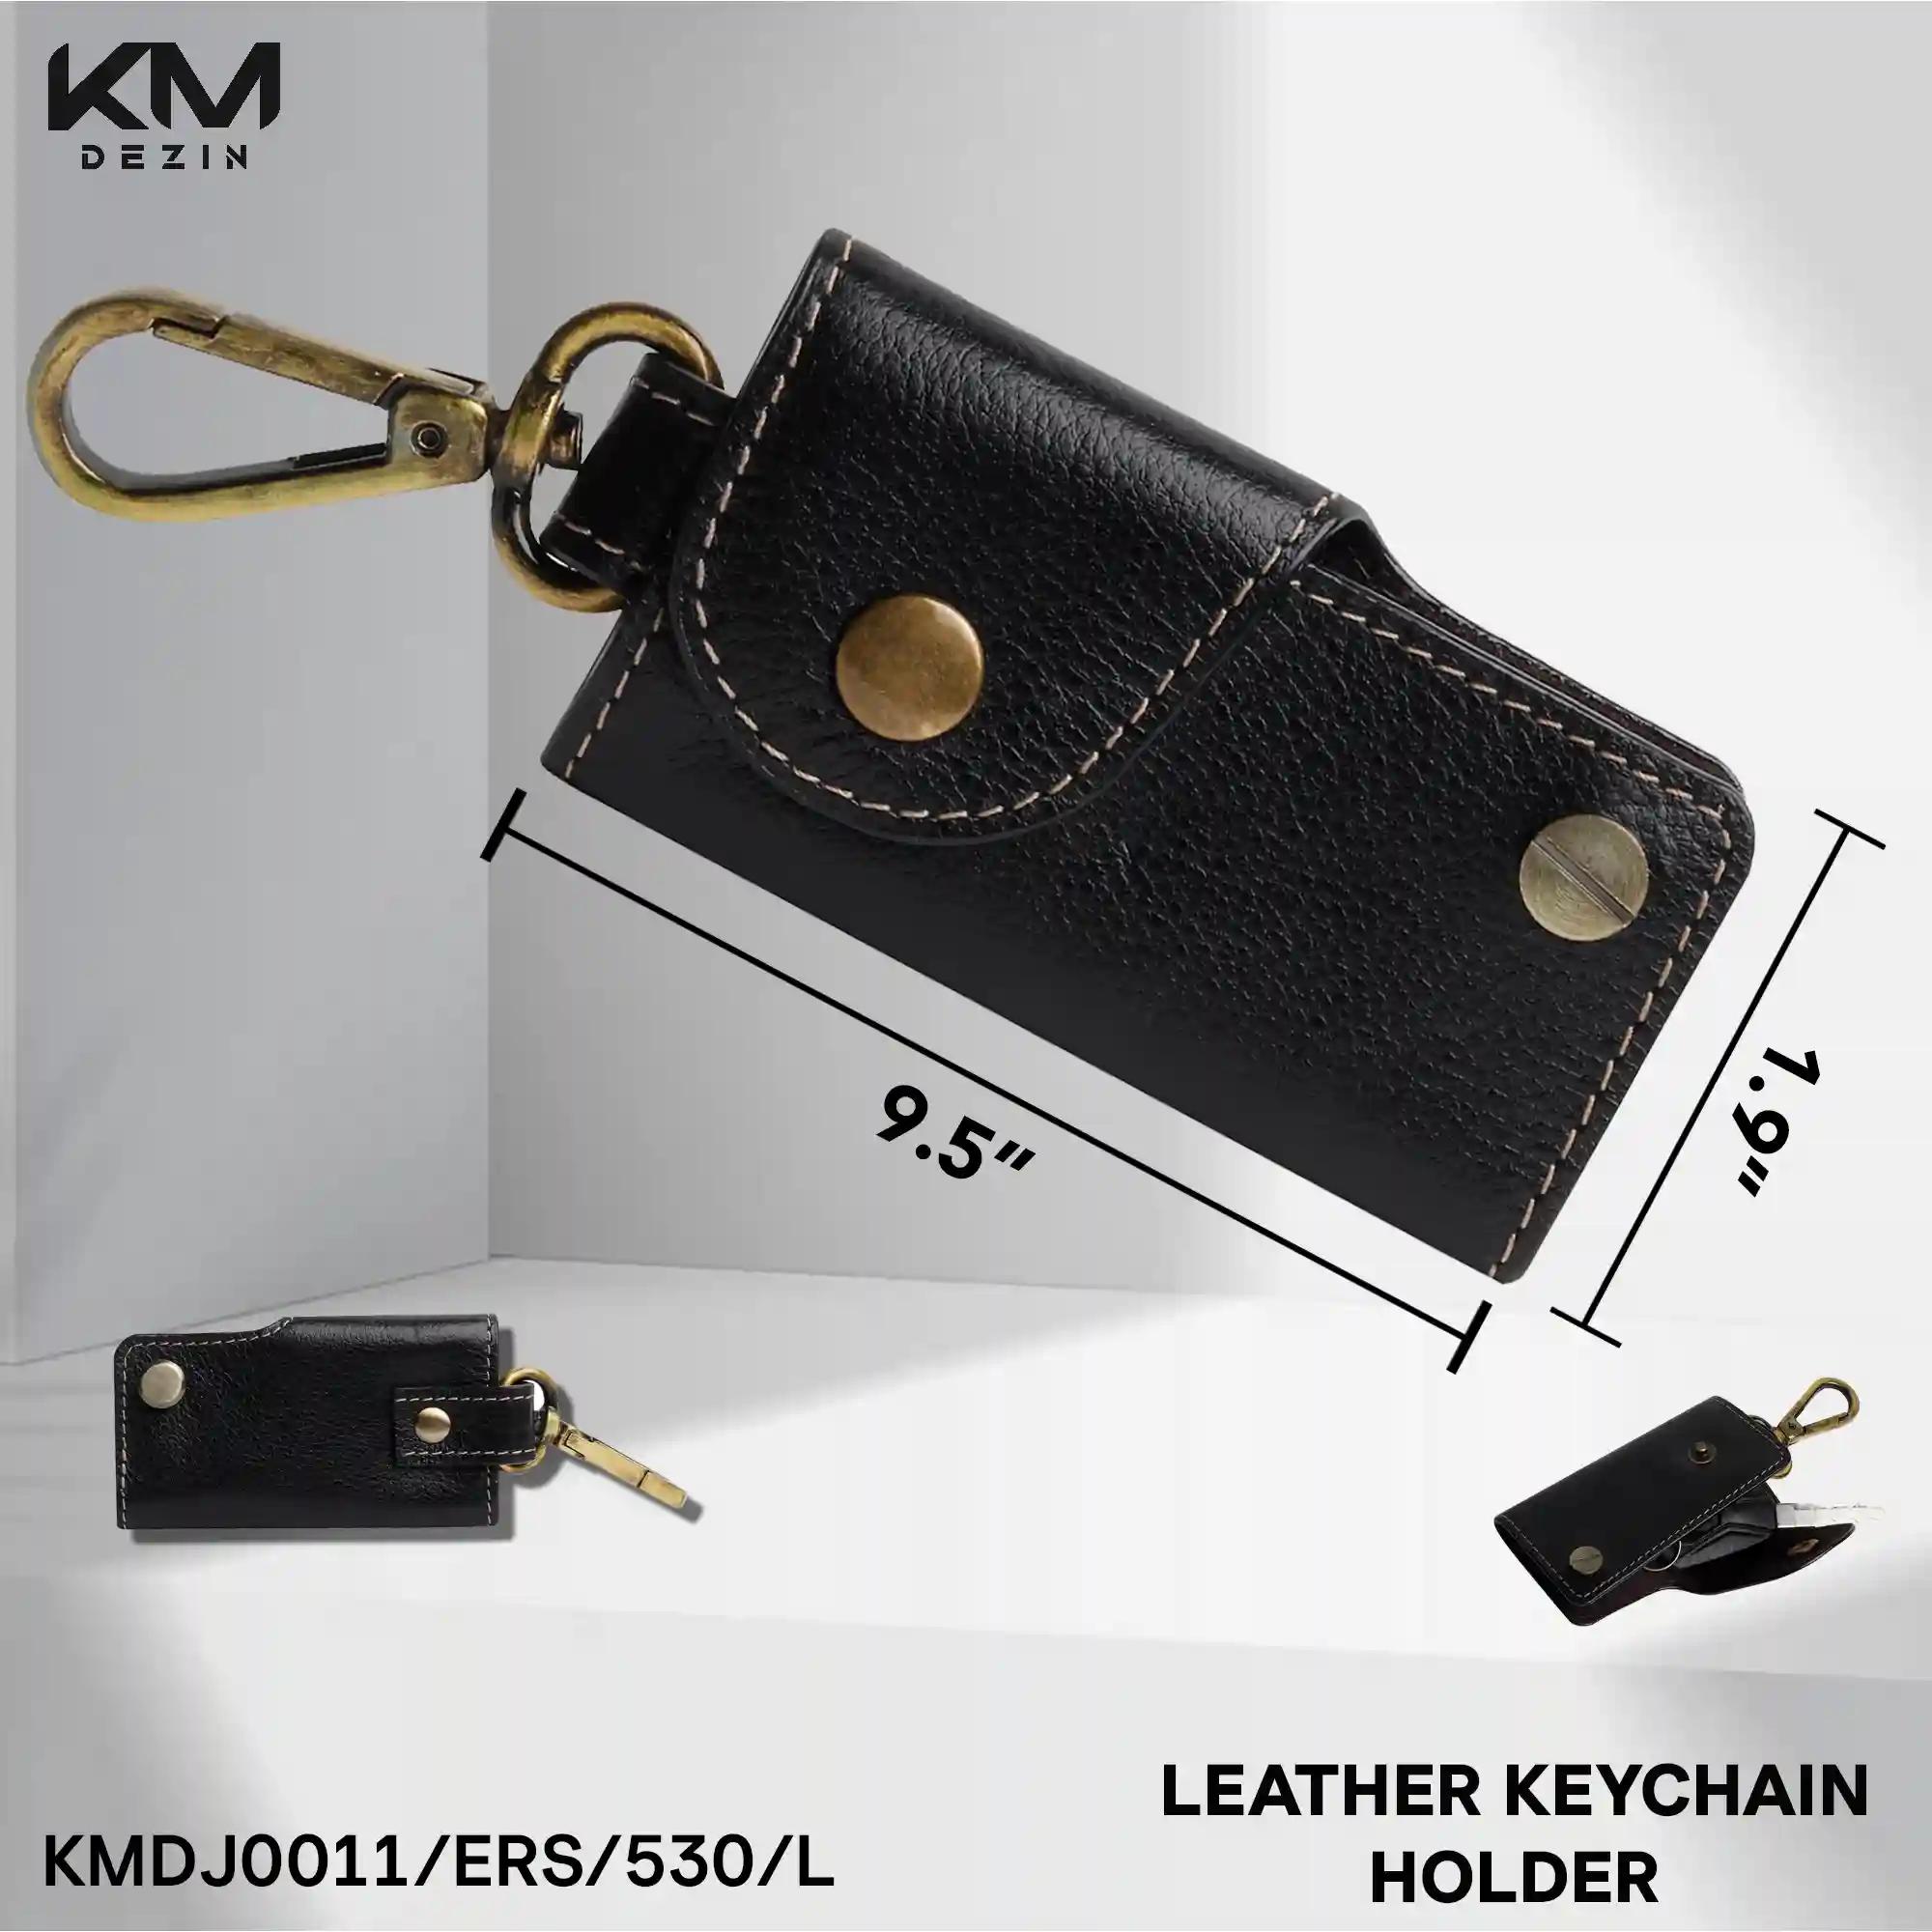 Leather Keychain Holder